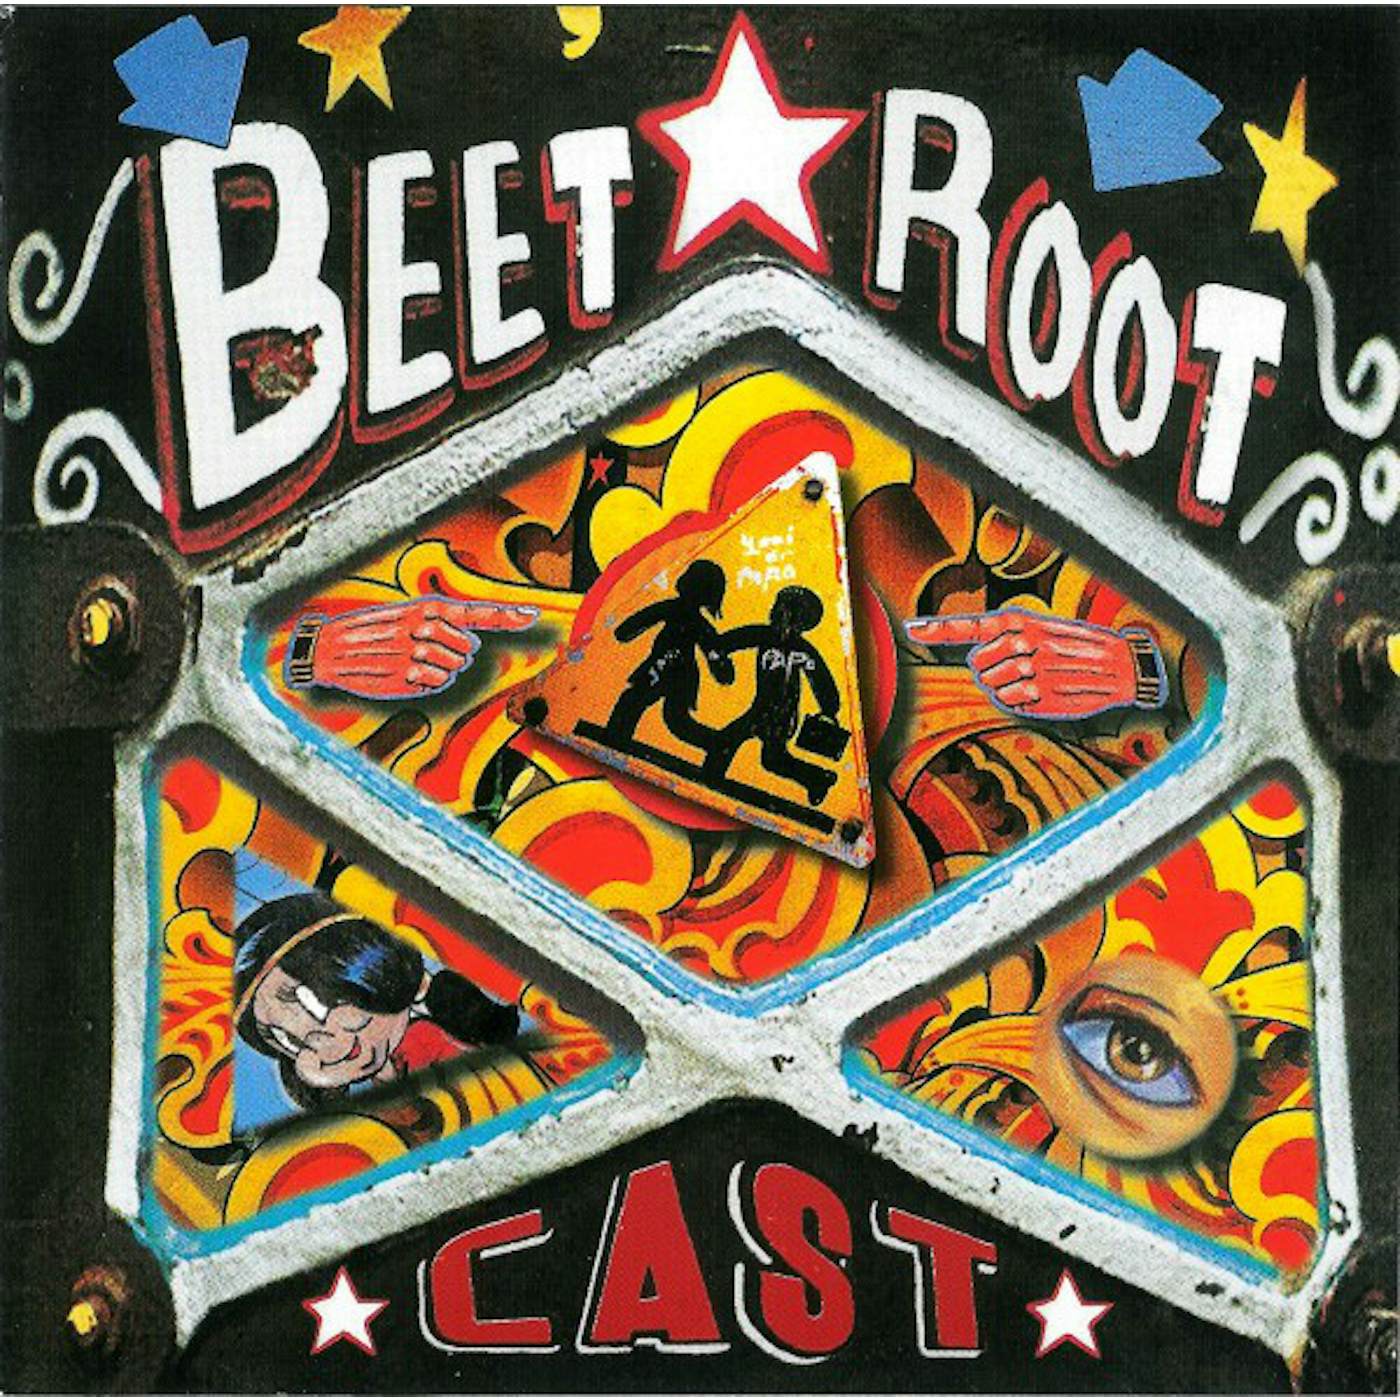 Cast Beetroot Vinyl Record